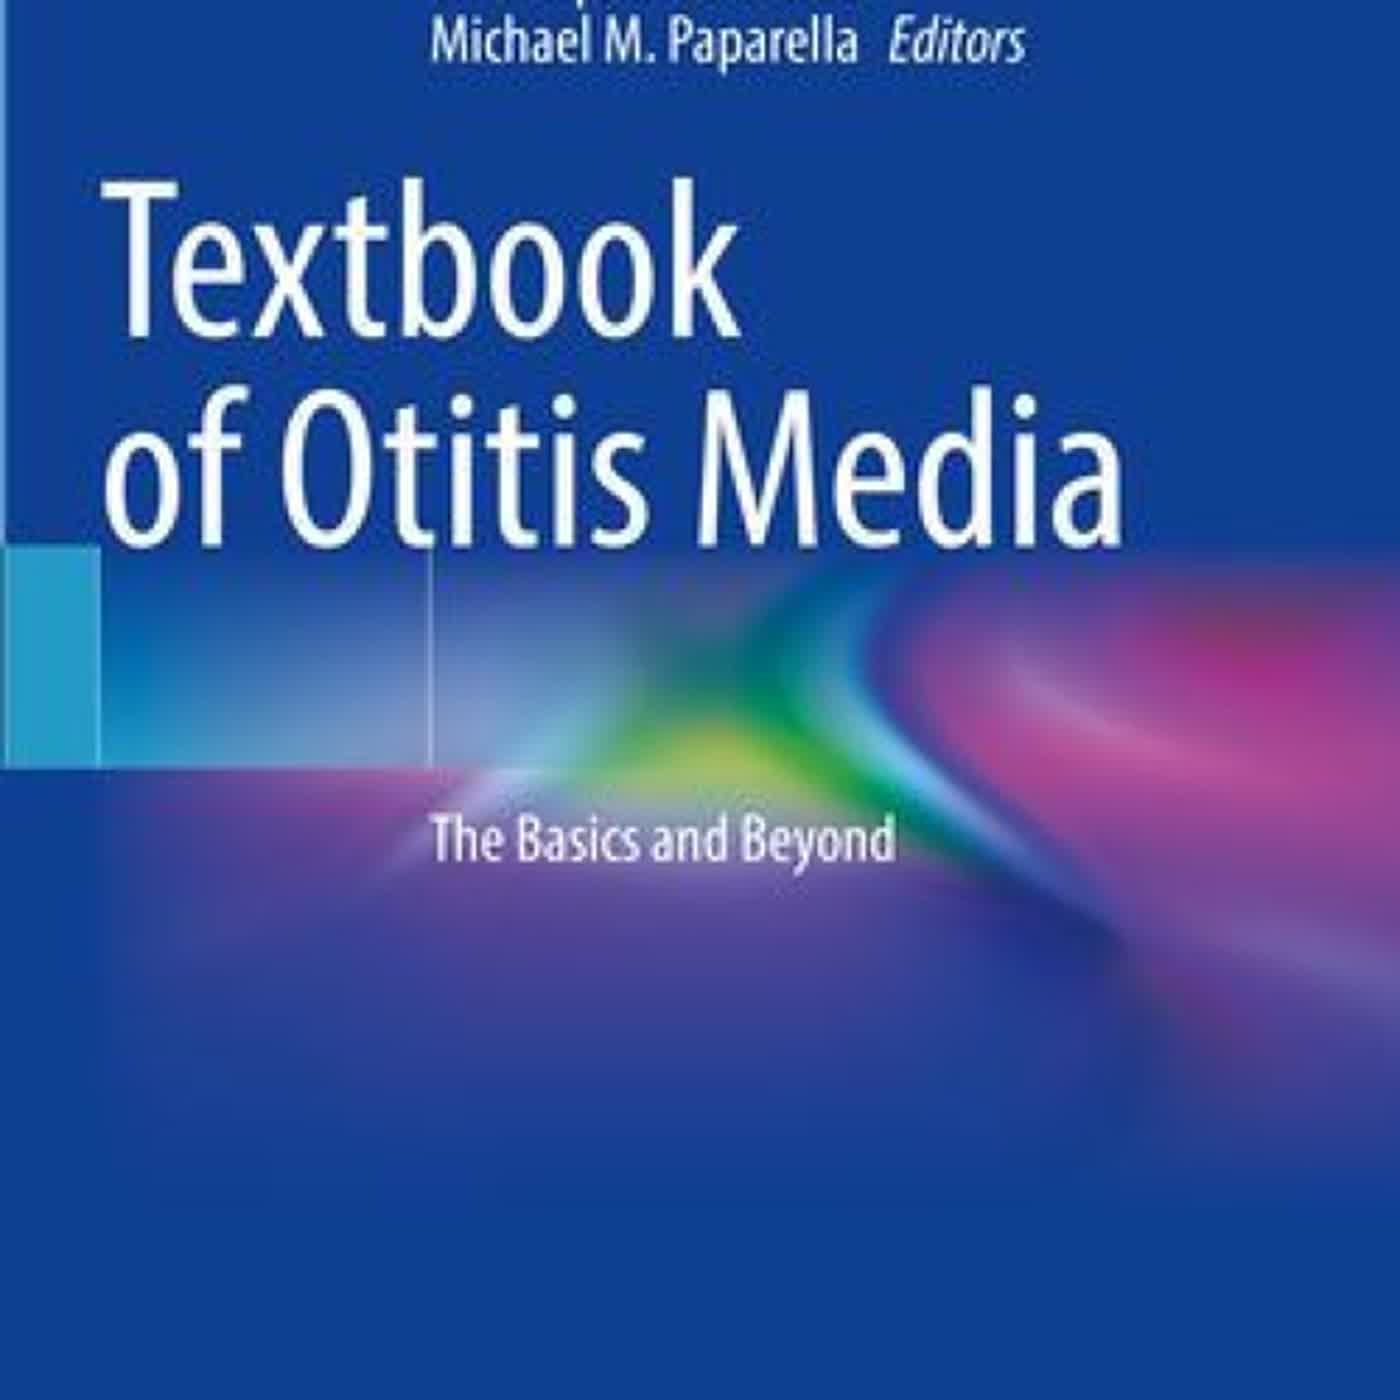 [Pdf/ePub] Textbook of Otitis Media: The Basics and Beyond by Marcos V. Goycoolea, Sady Selaimen da Costa, Chris de Souza, Michael M. Paparella download ebook